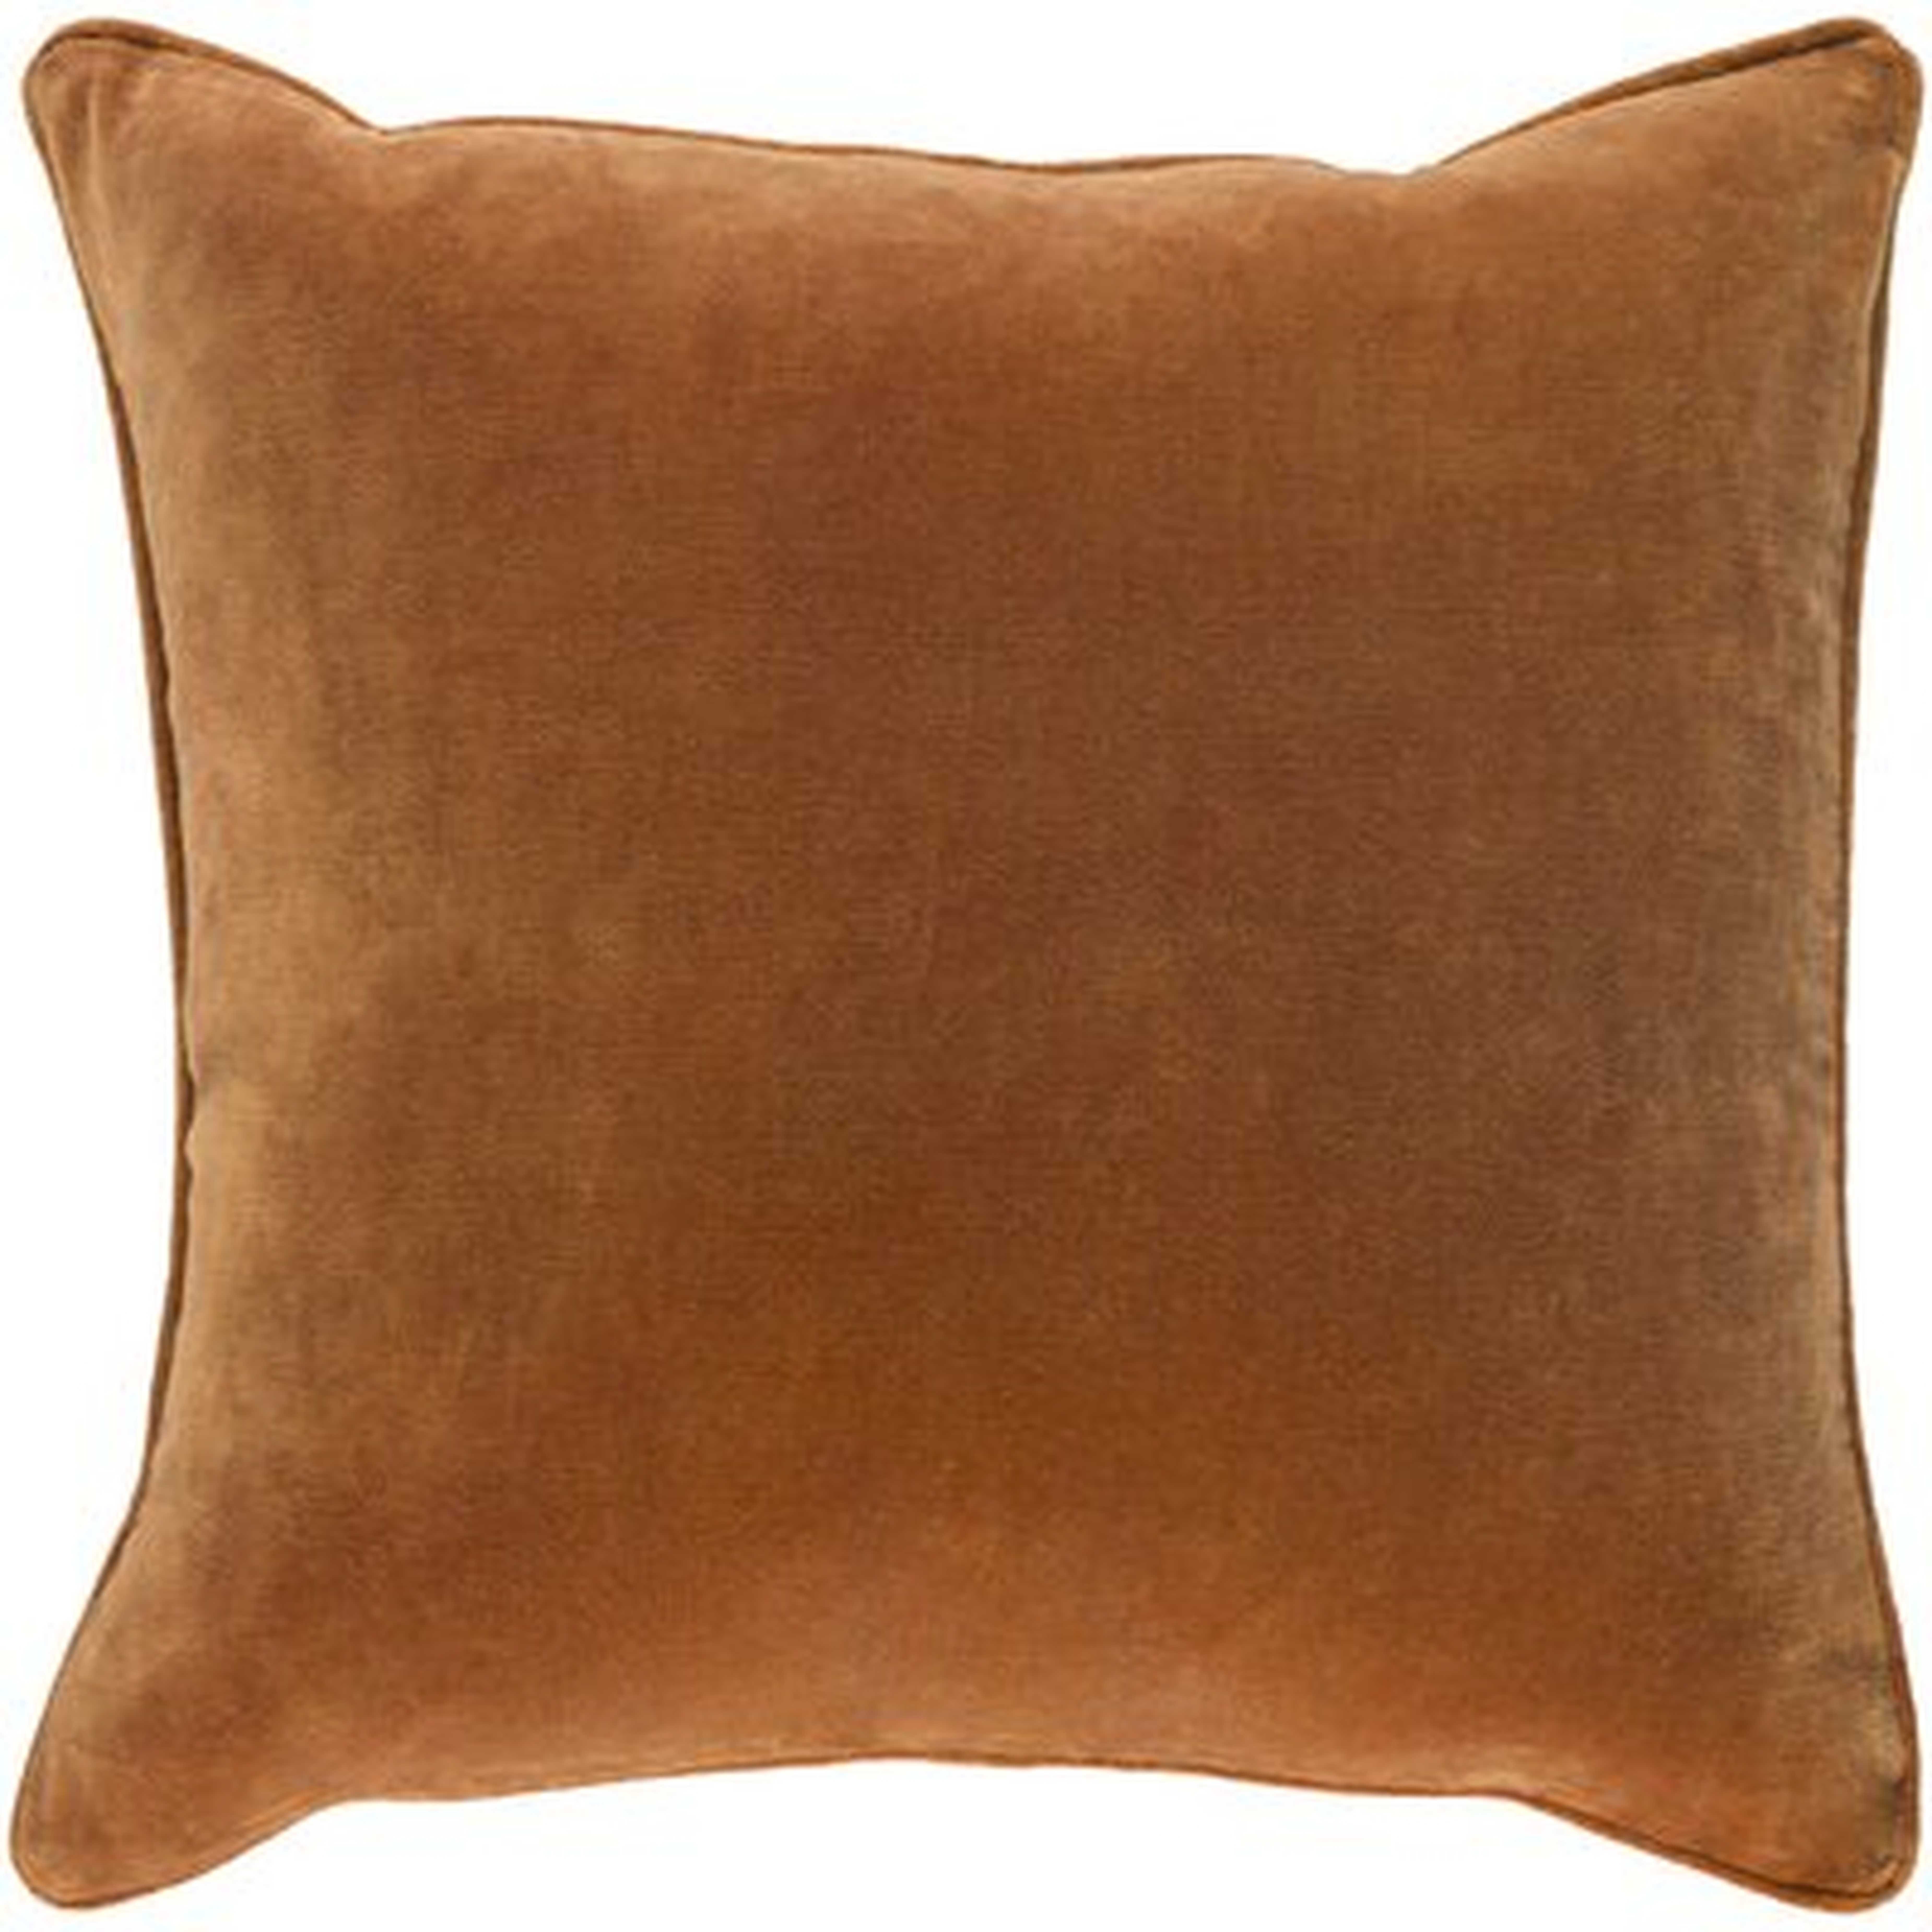 Neppie Square Cotton Pillow Cover - Wayfair